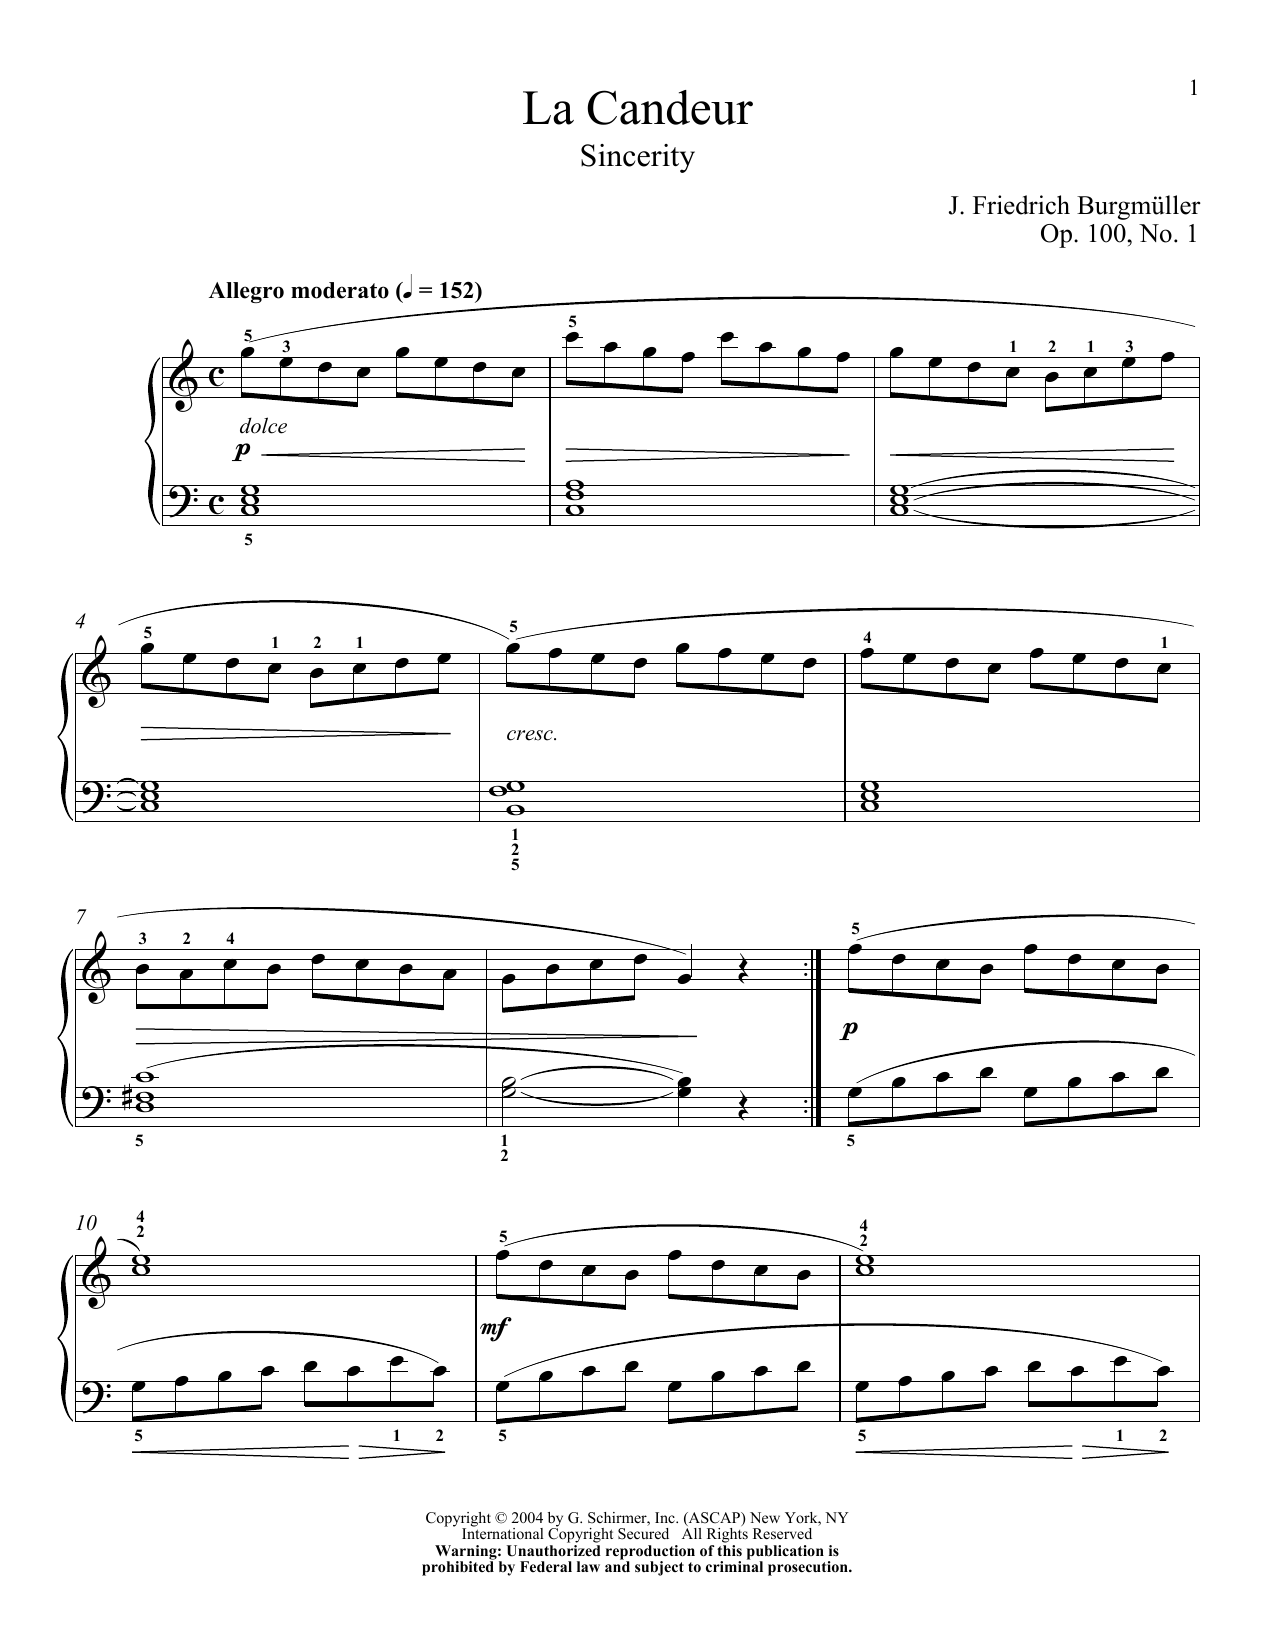 Johann Friedrich Burgmuller Sincerity (La Candeur), Op. 100, No. 1 Sheet Music Notes & Chords for Piano - Download or Print PDF